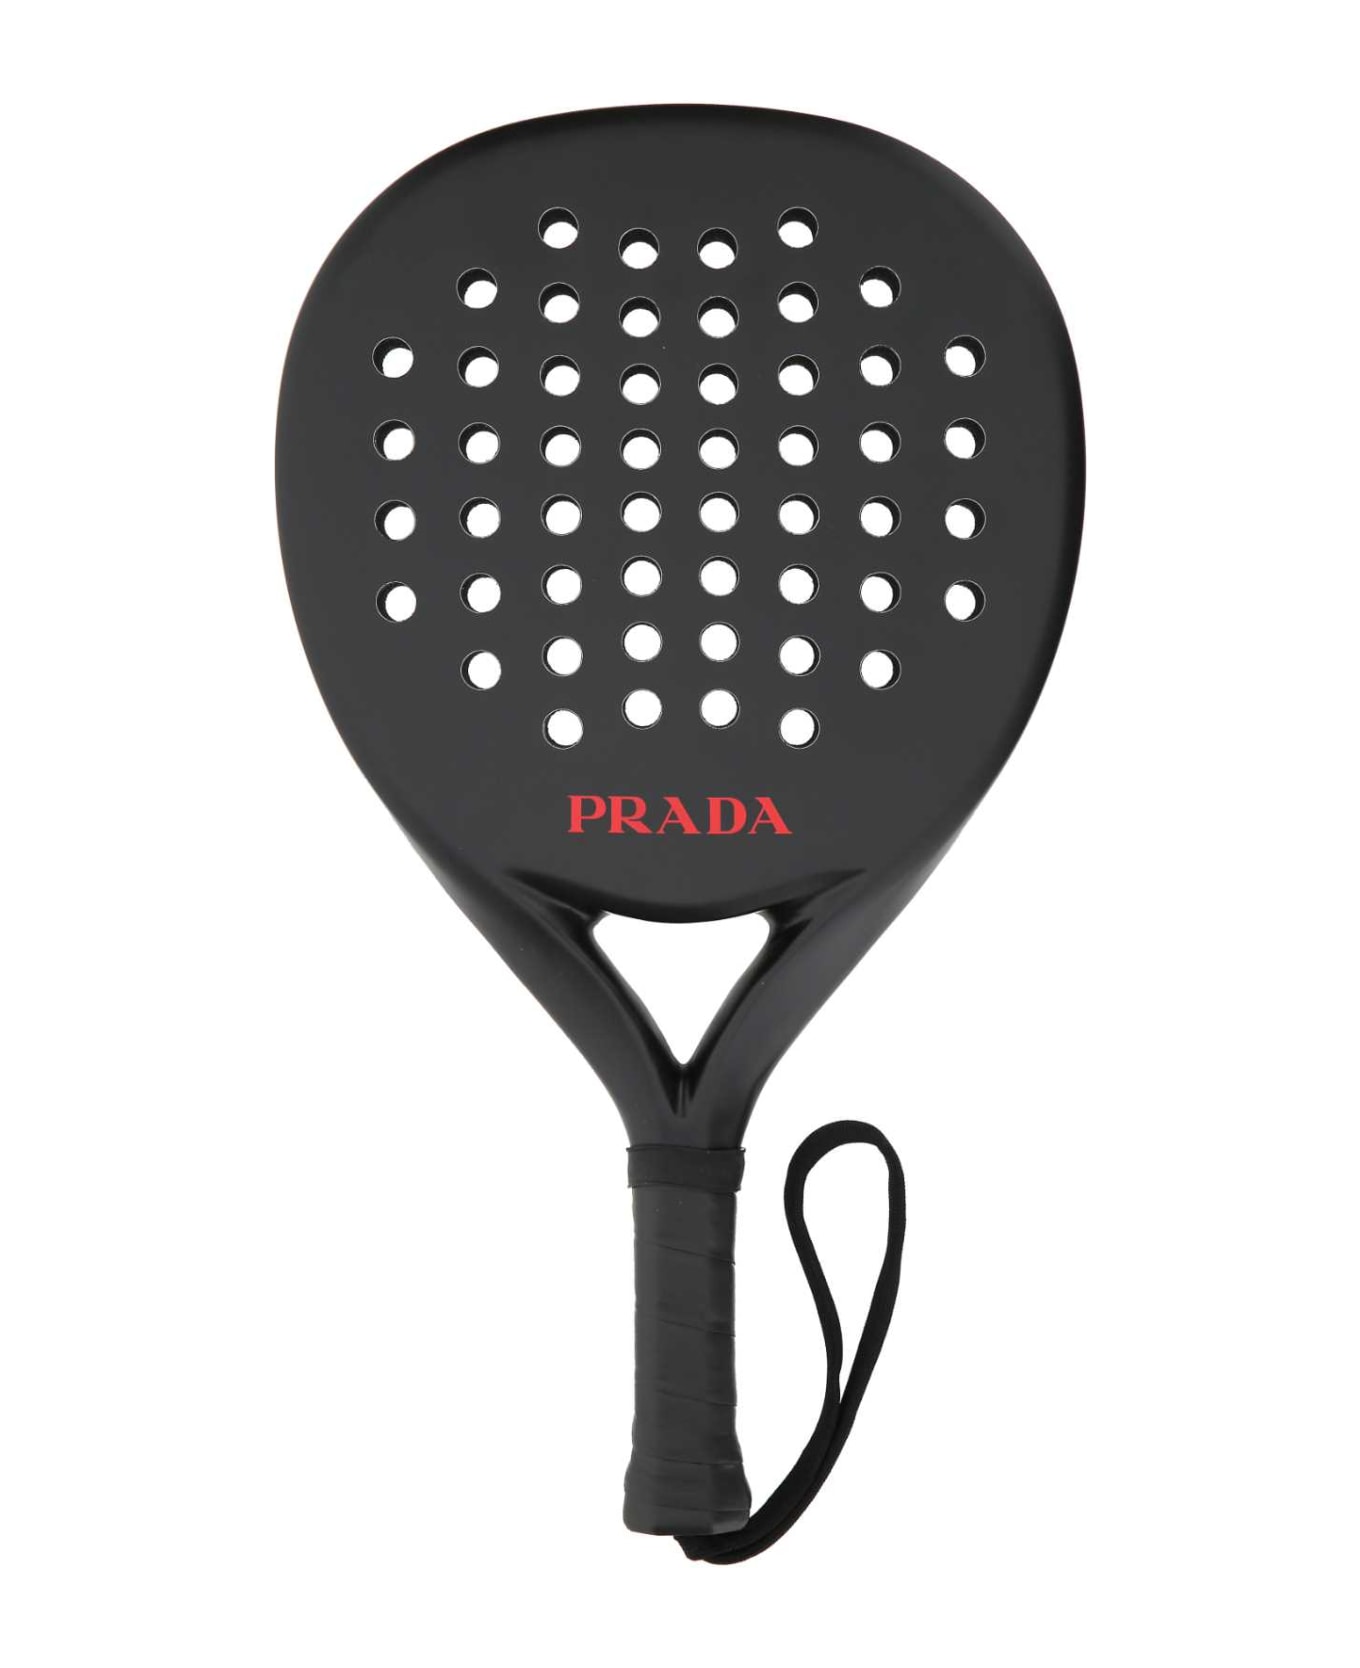 Prada Paddle Racket - F0002